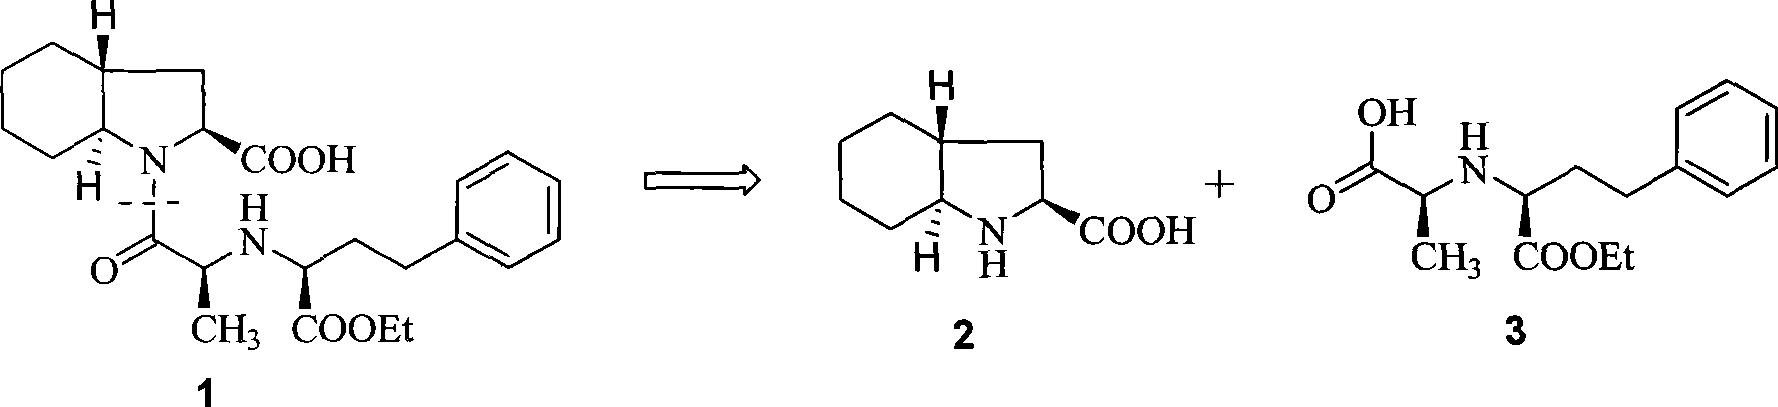 Synthetic method of trandolapril key intermediate (2S,3aR,7as)-octahydro-1H-indole-2-carboxylic acid